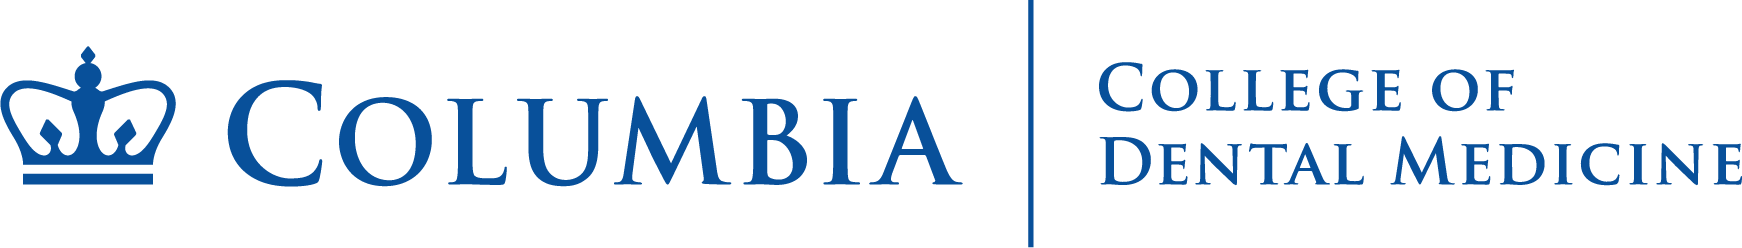 Logo for Columbia University College of Dental Medicine